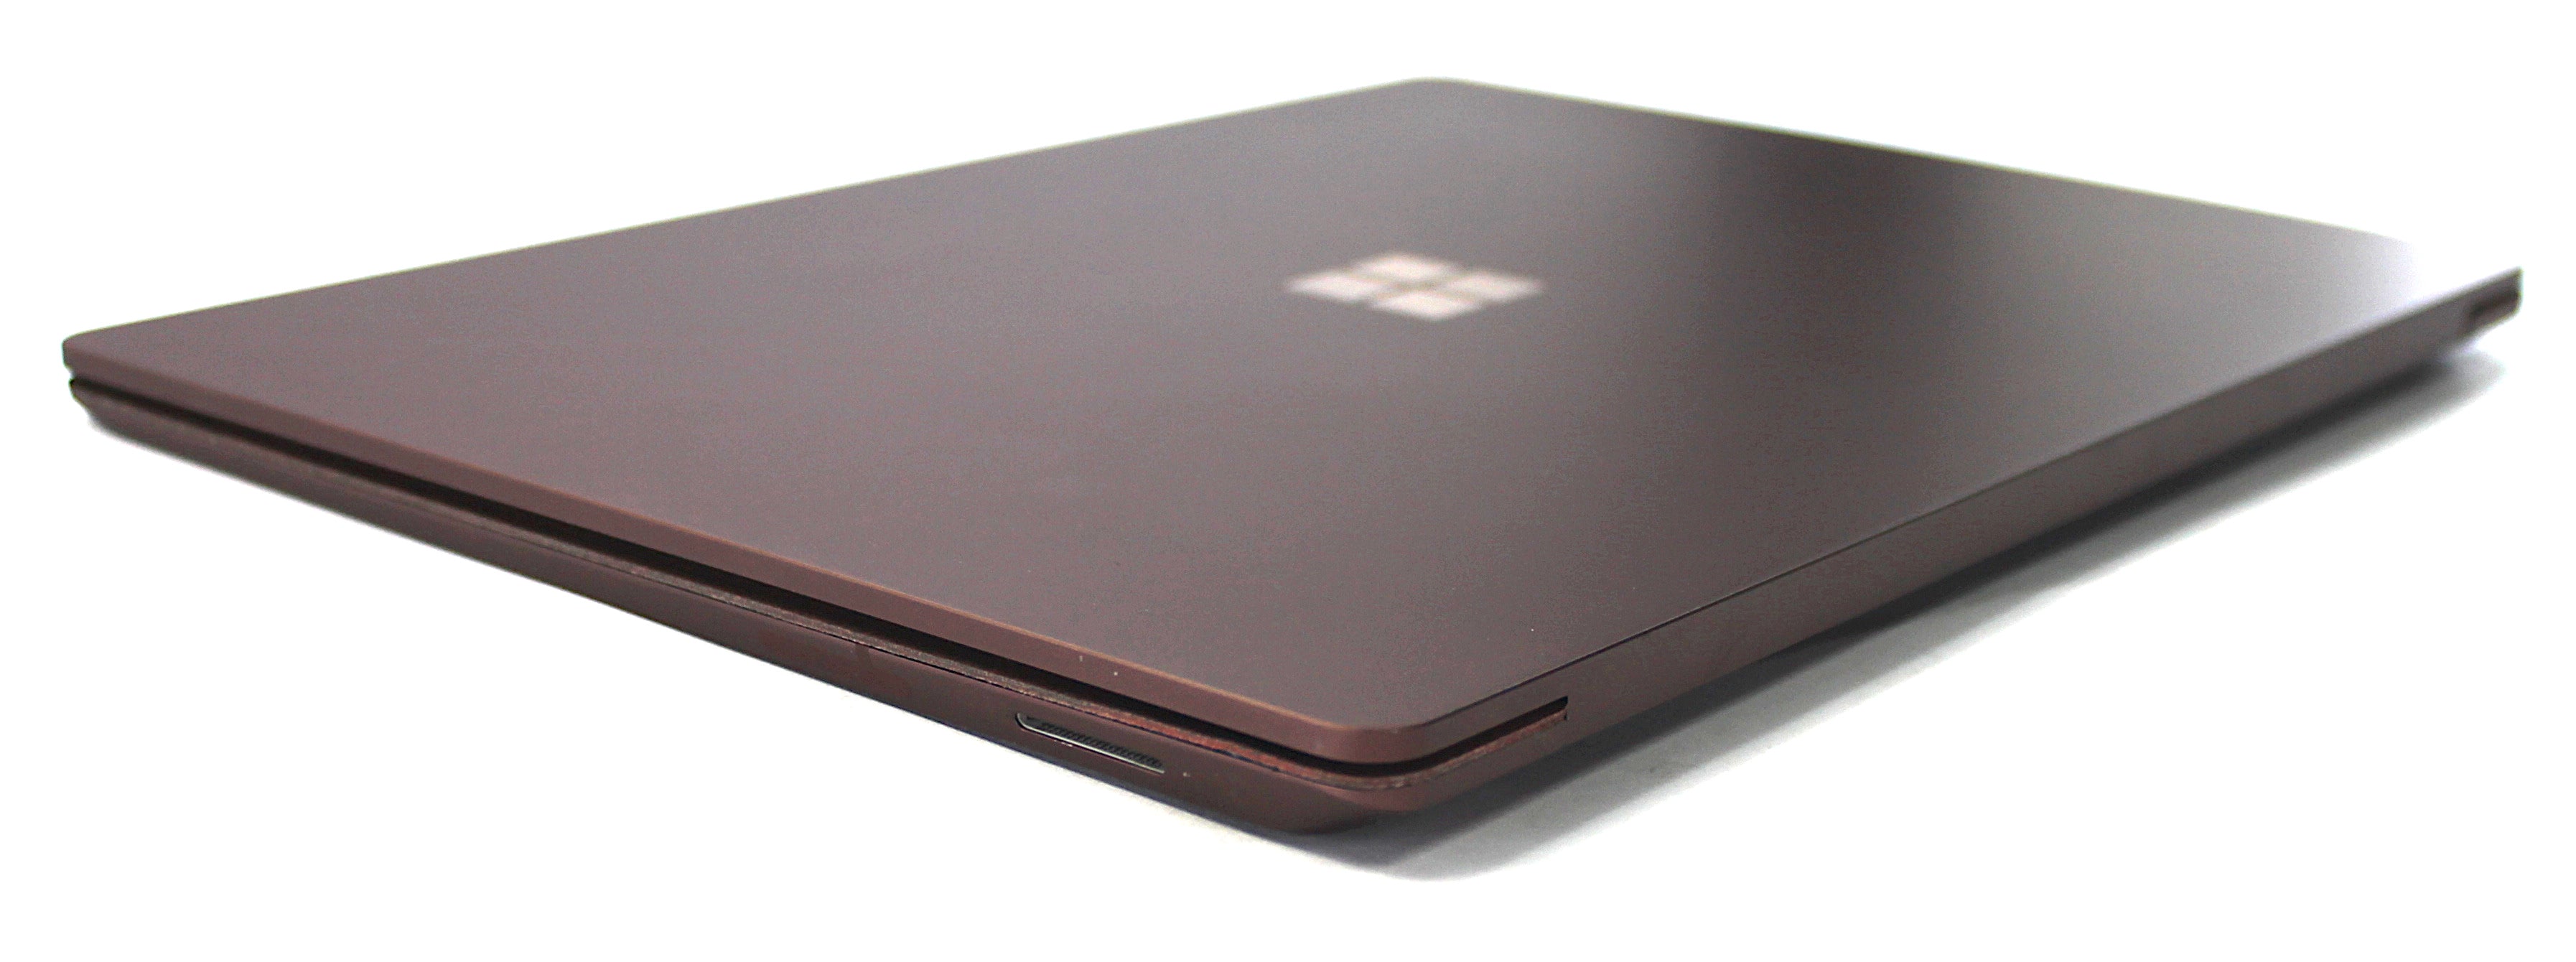 Microsoft Surface Laptop 2, 13" Intel Core i5, 8GB RAM, 256GB eMMC